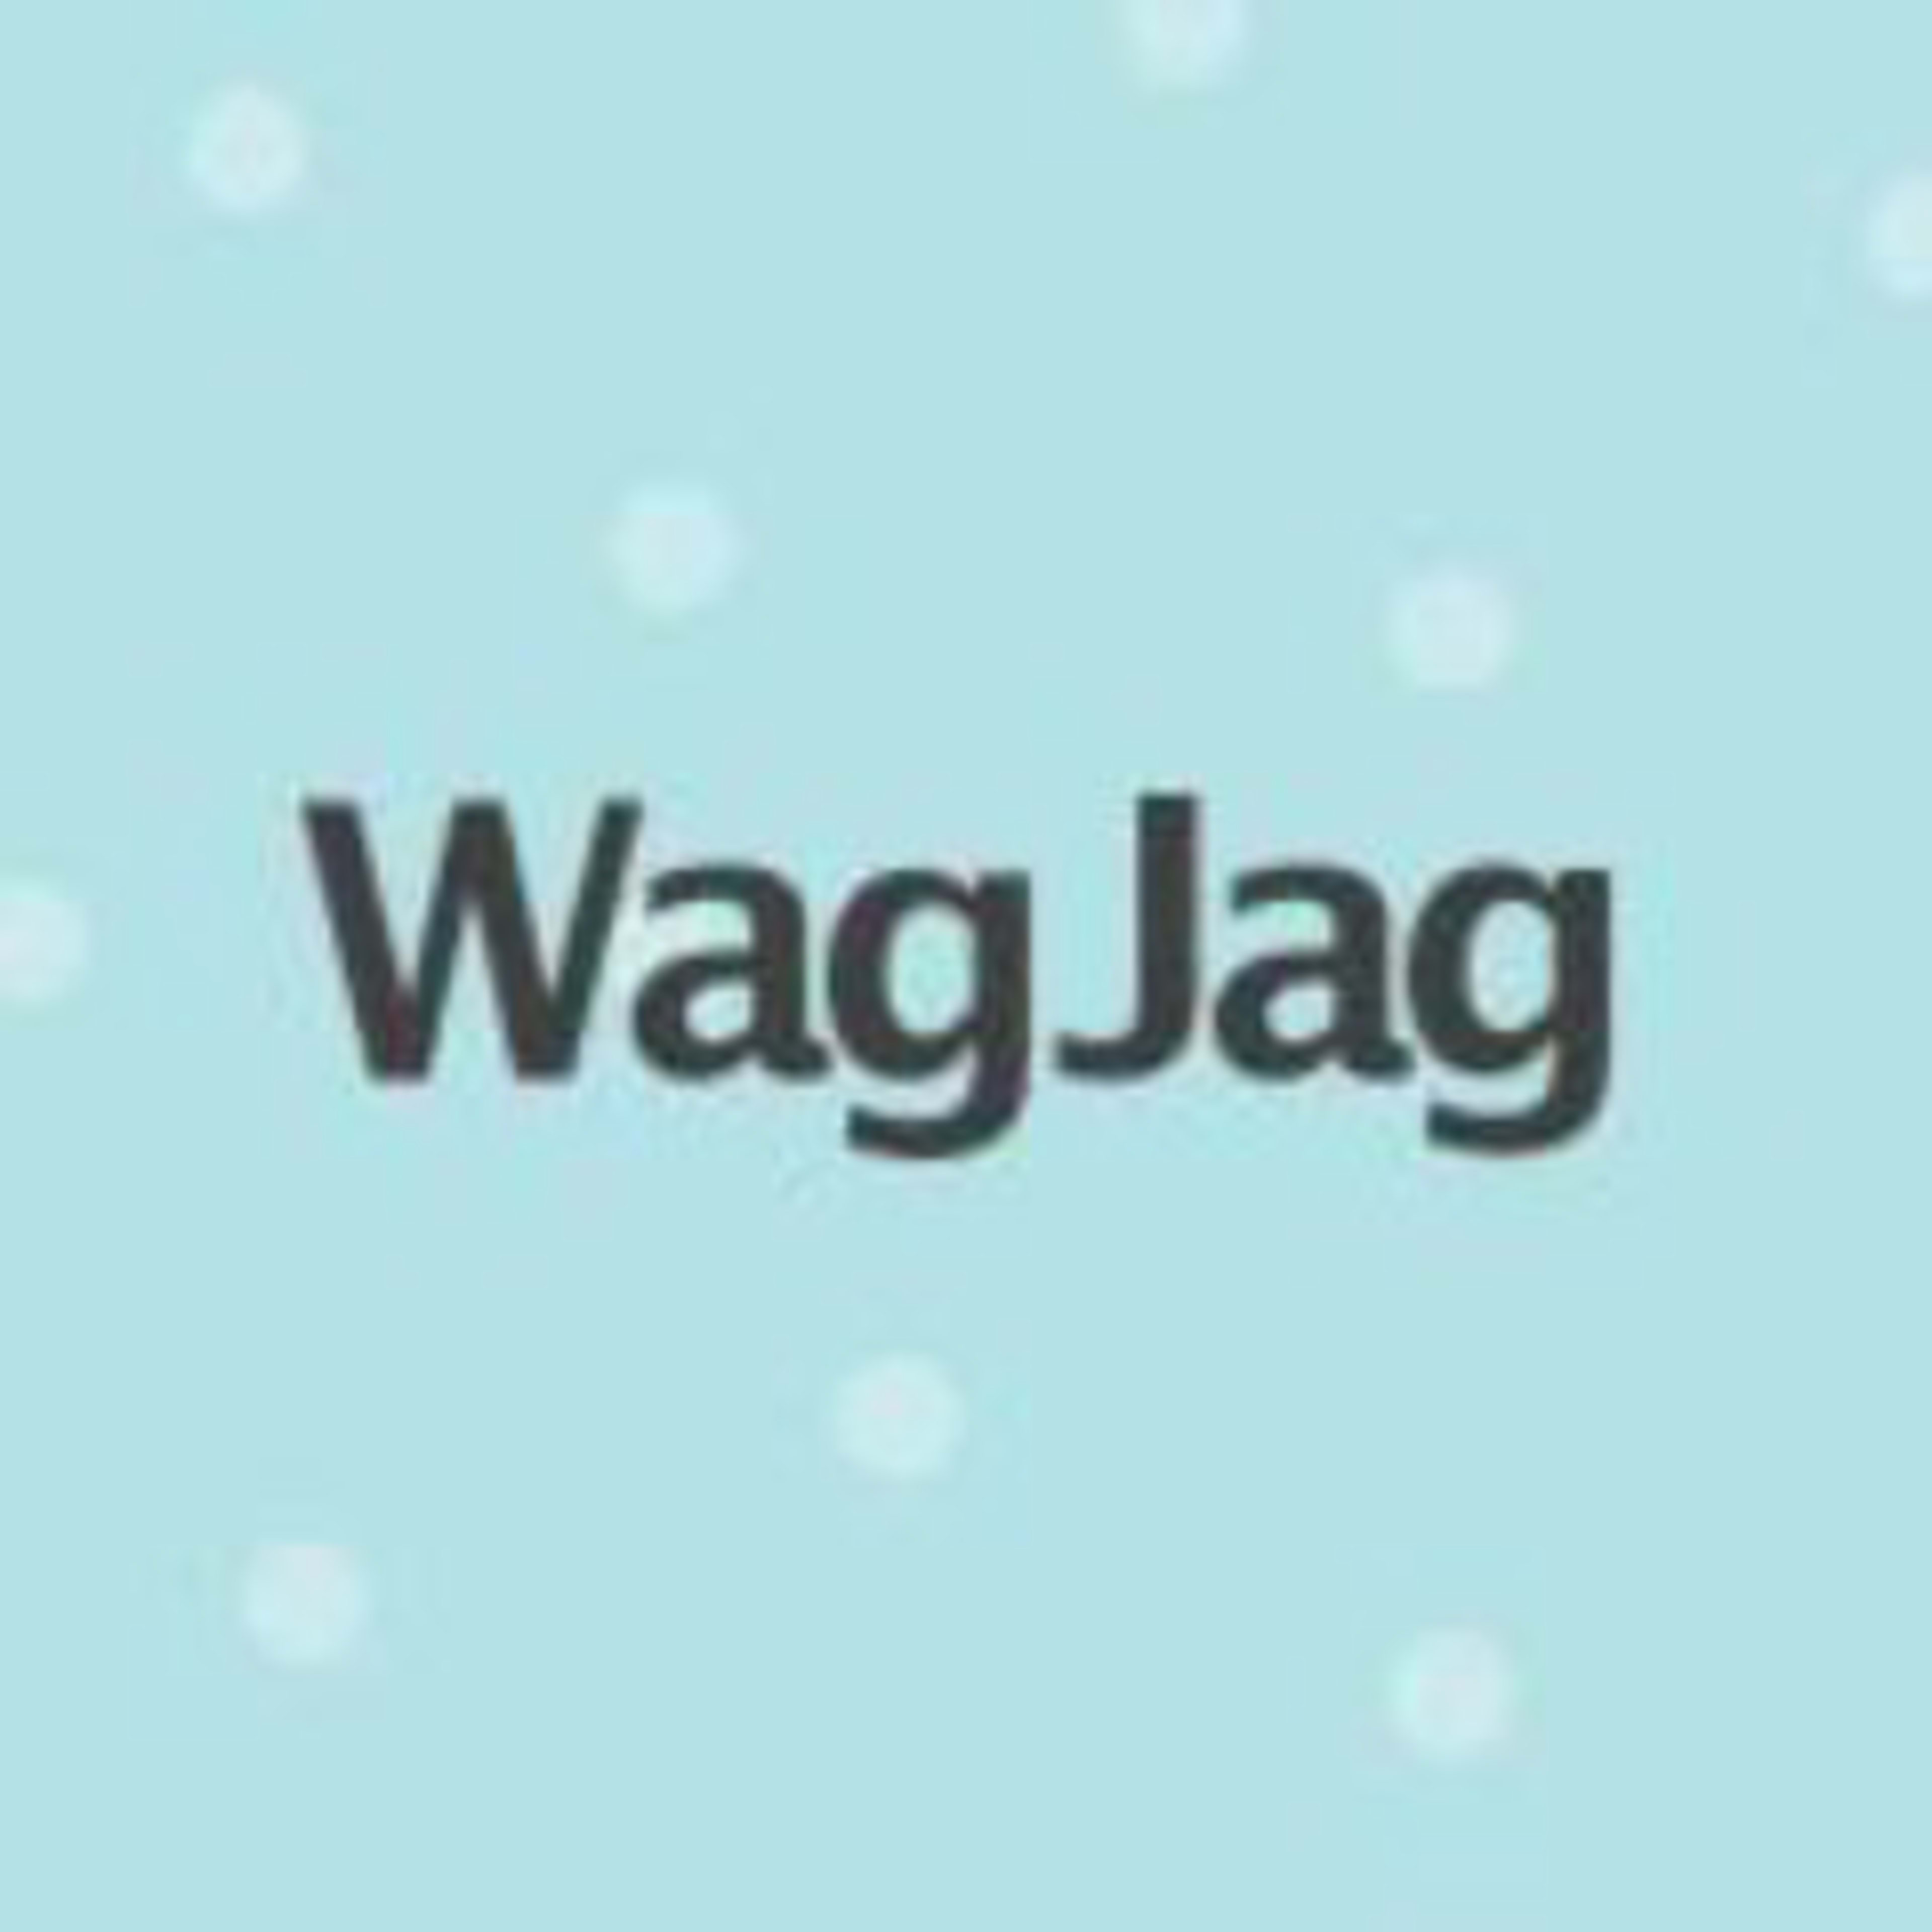 WagJag Code